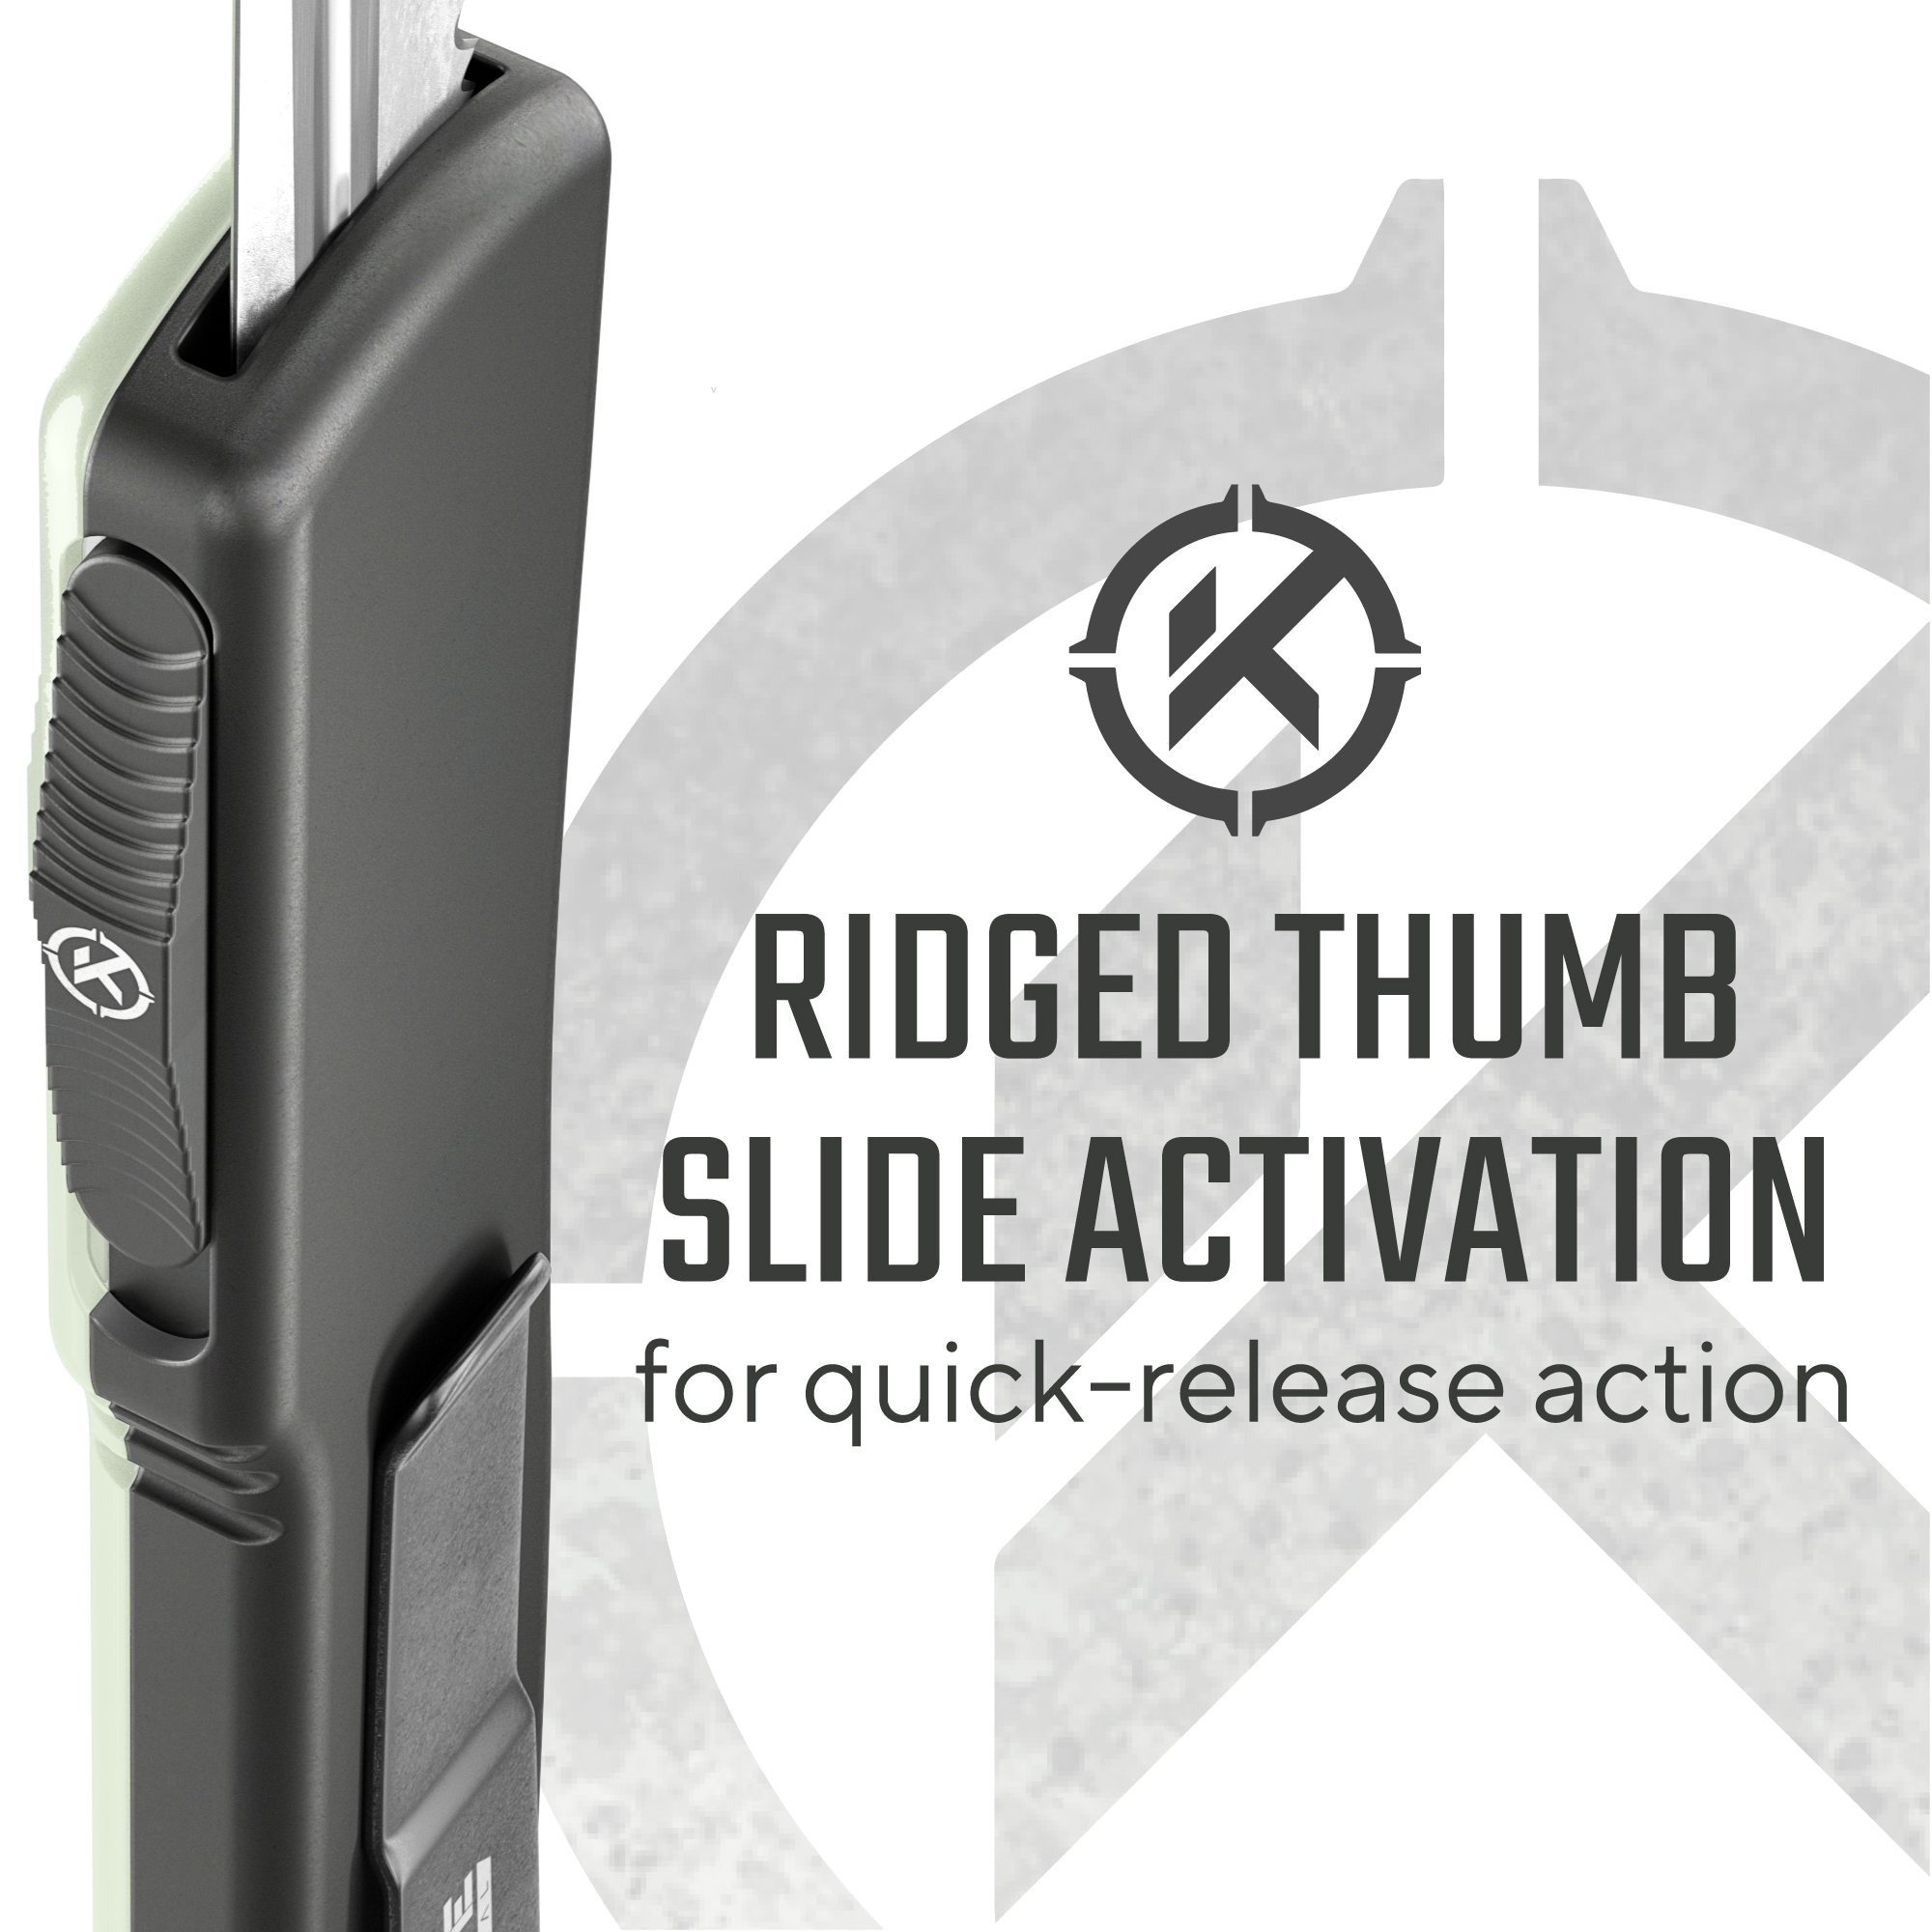 Ridged Thumb Slide Activation